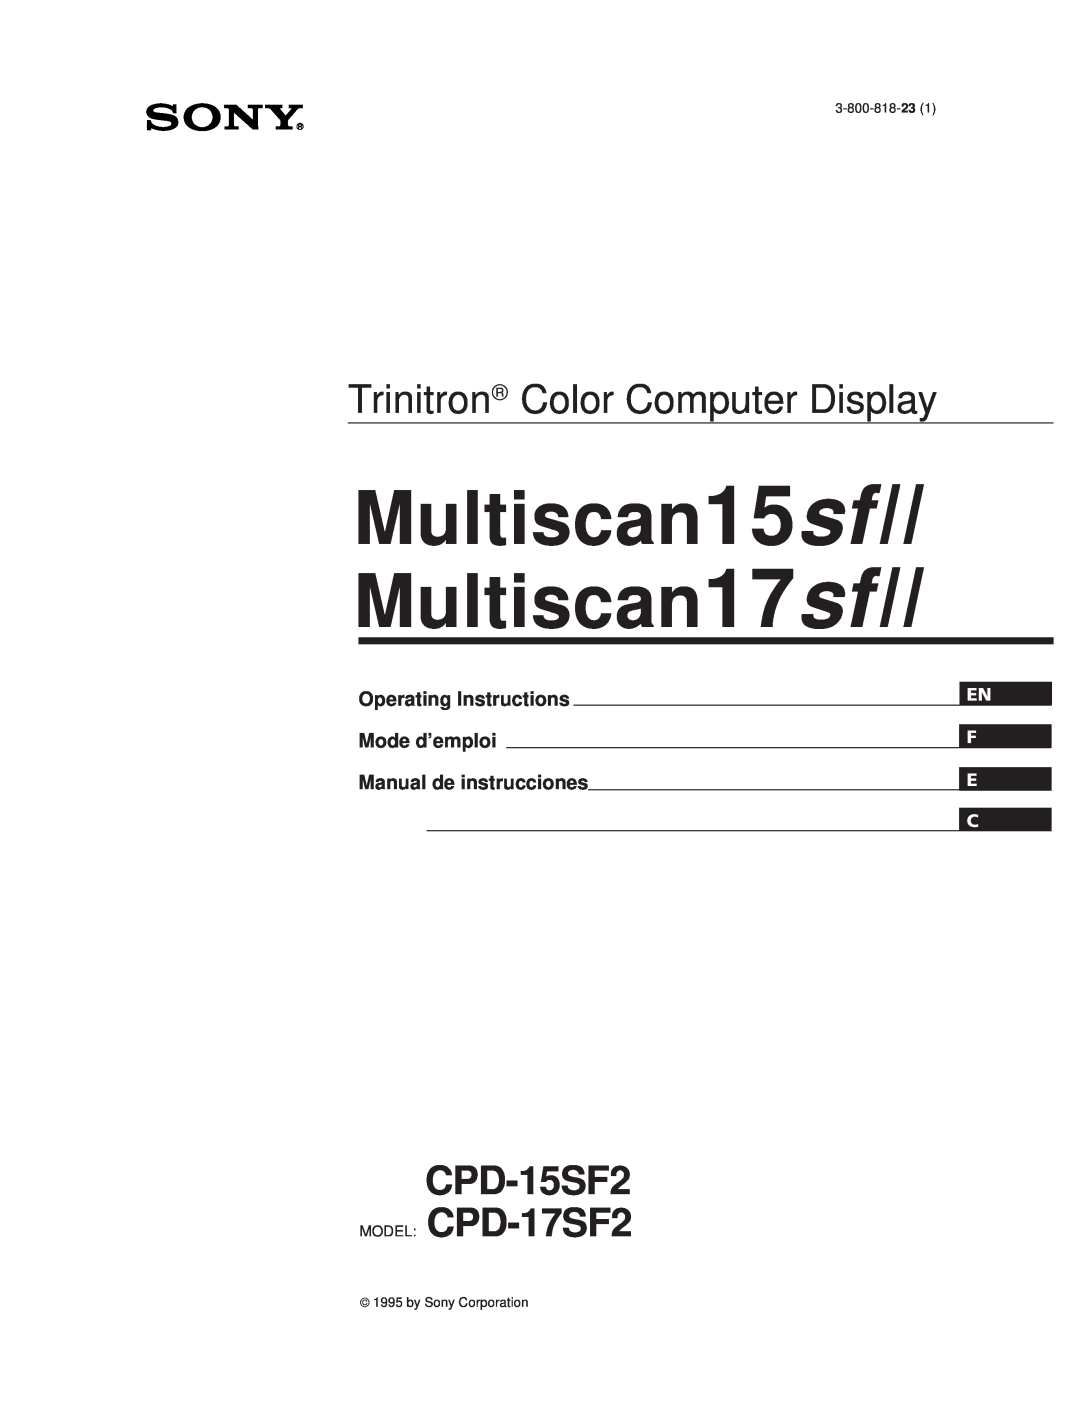 Sony CPD-15SF2 manual En F E C, 15sfII 17sfII, Multiscan Multiscan, Trinitron Color Computer Display, 3-800-818-23 